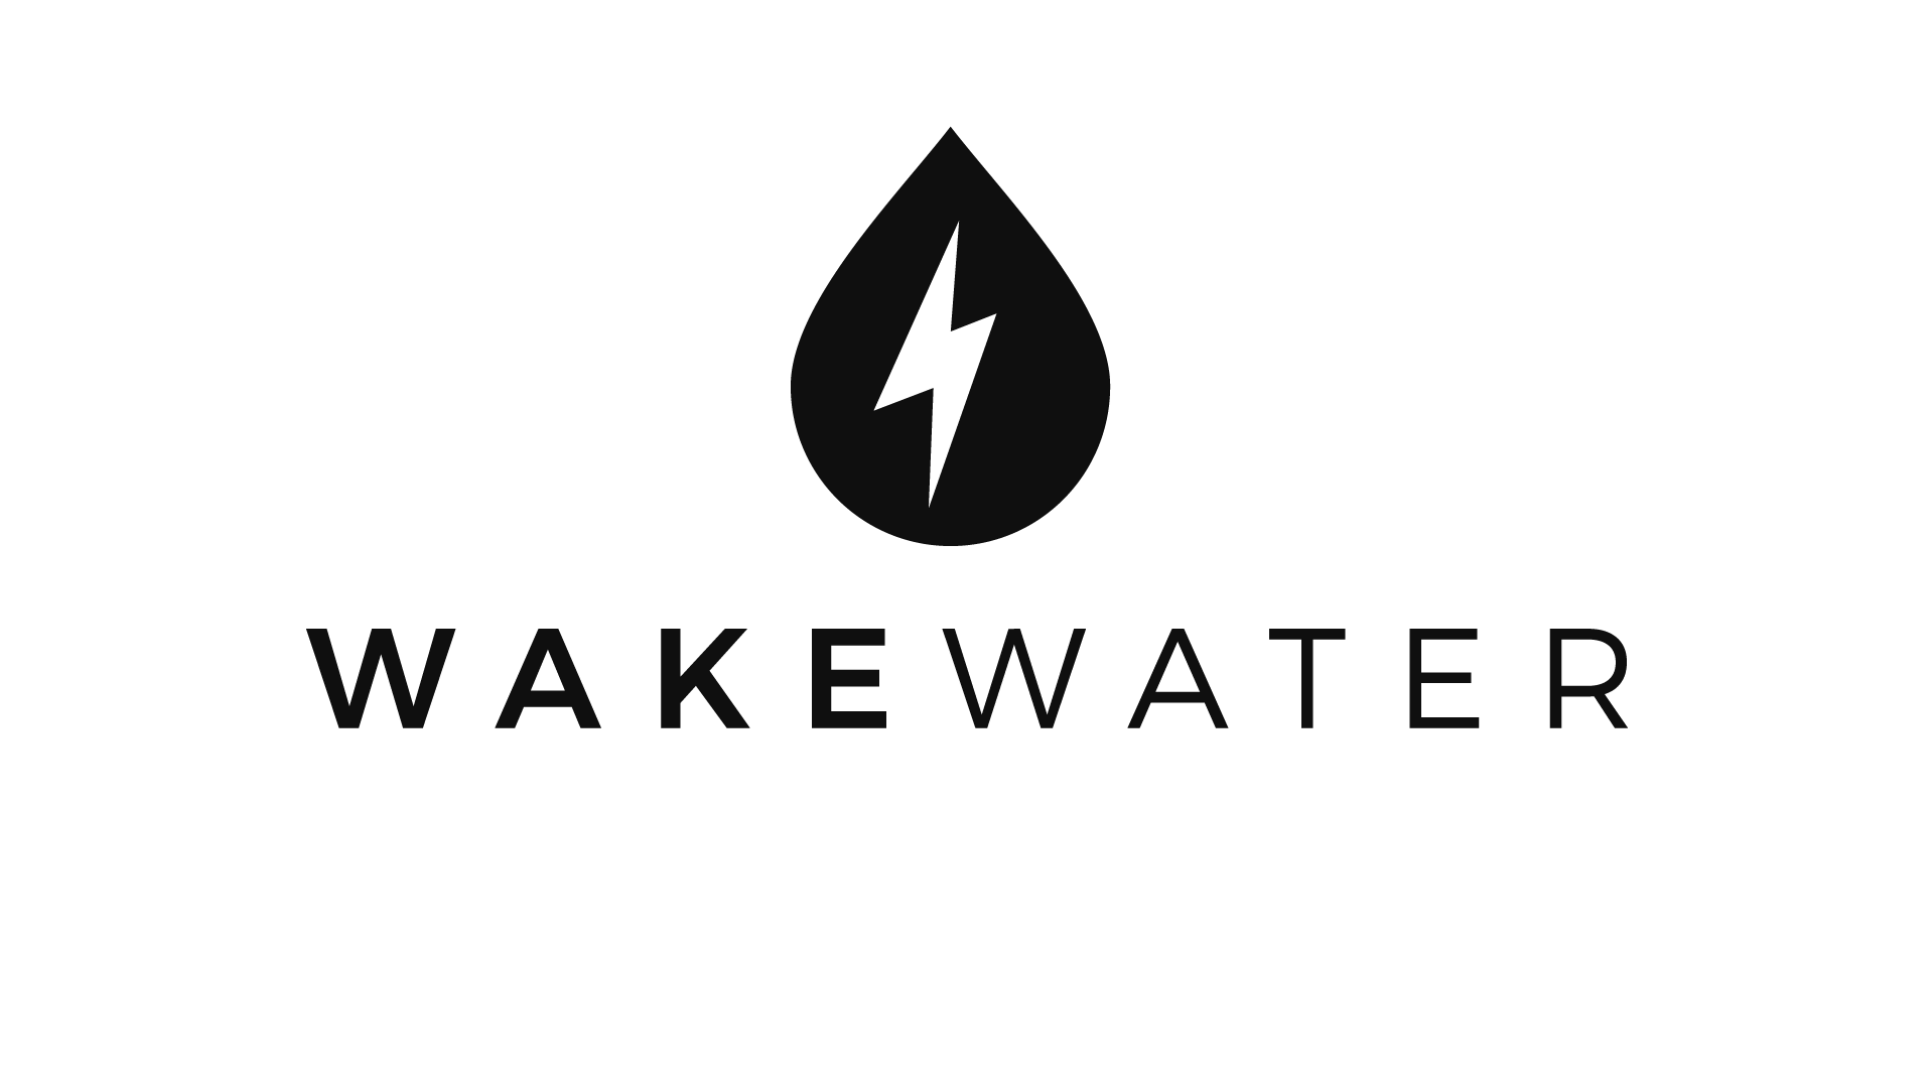 Wakewater logo.png